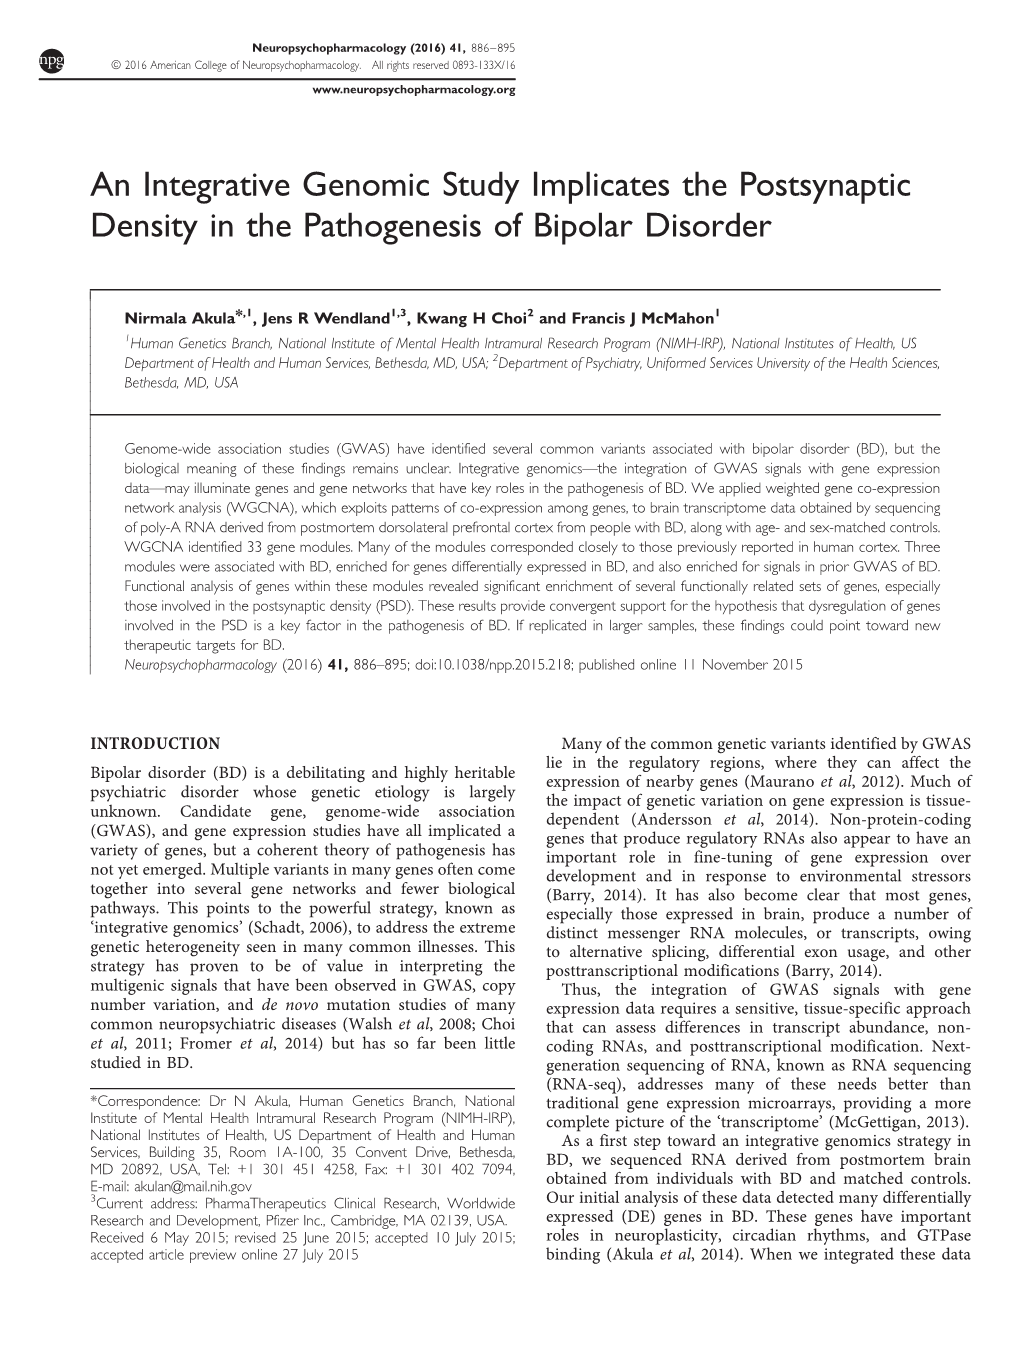 An Integrative Genomic Study Implicates the Postsynaptic Density in the Pathogenesis of Bipolar Disorder